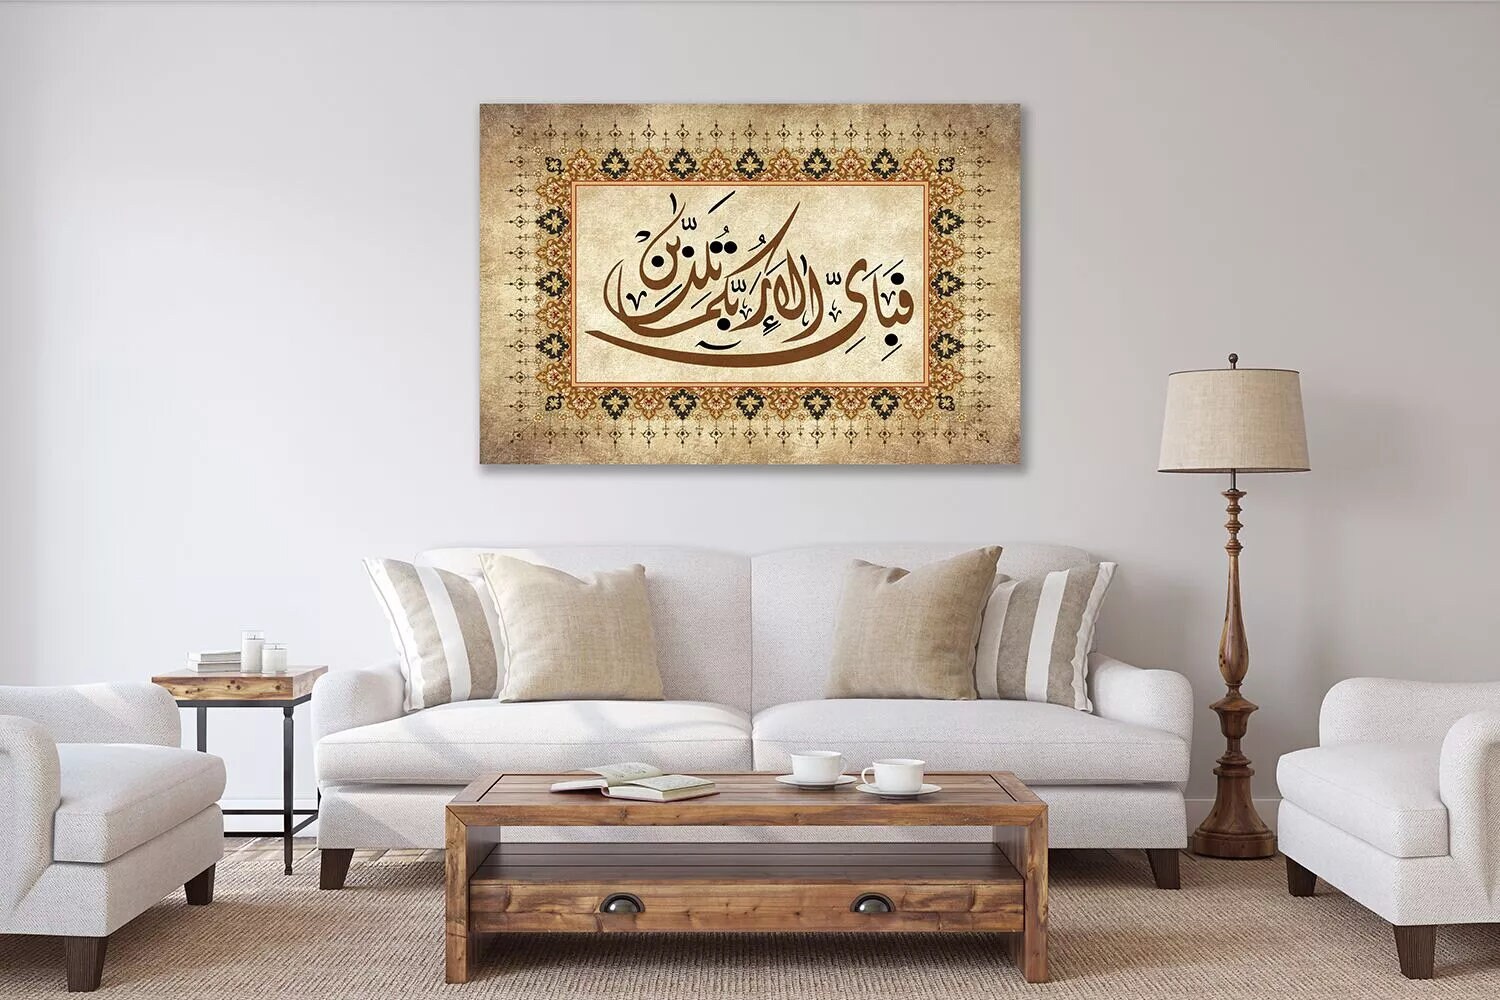 Islamic Gold Floral Circle Frame. Jpeg, Png. Instant Digital Download.